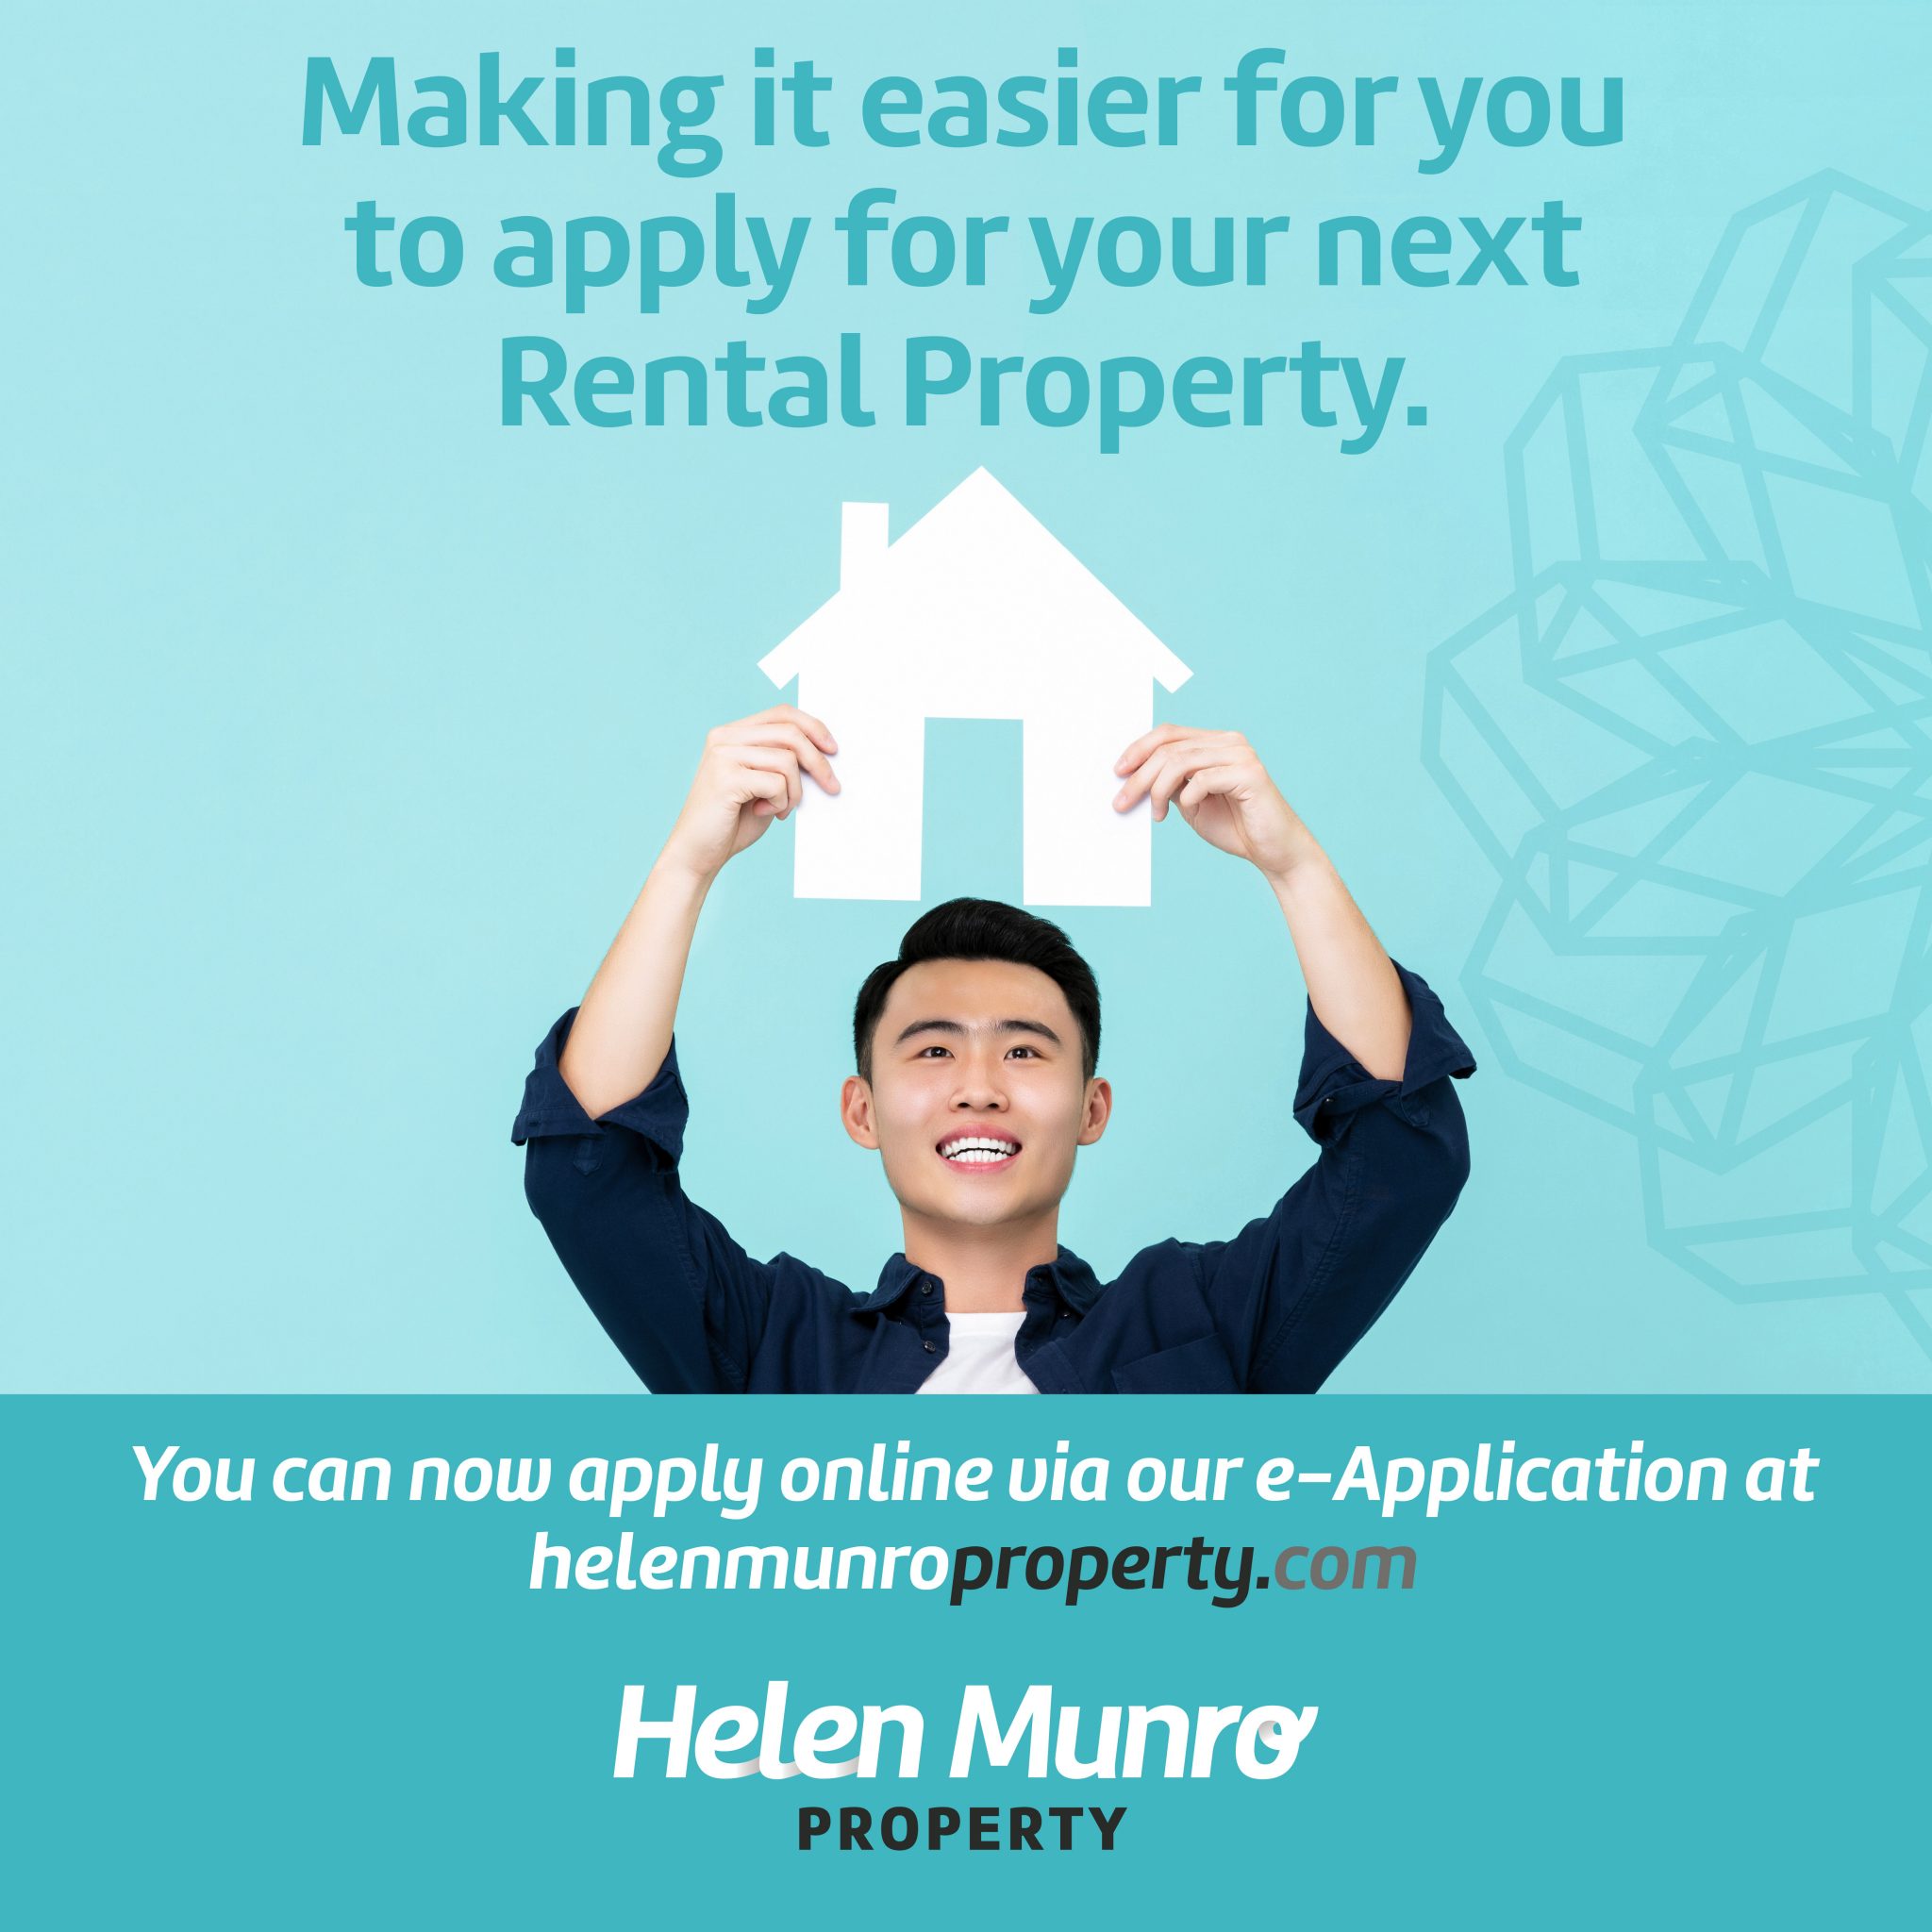 Online tenancy application forms Helen Munro Property